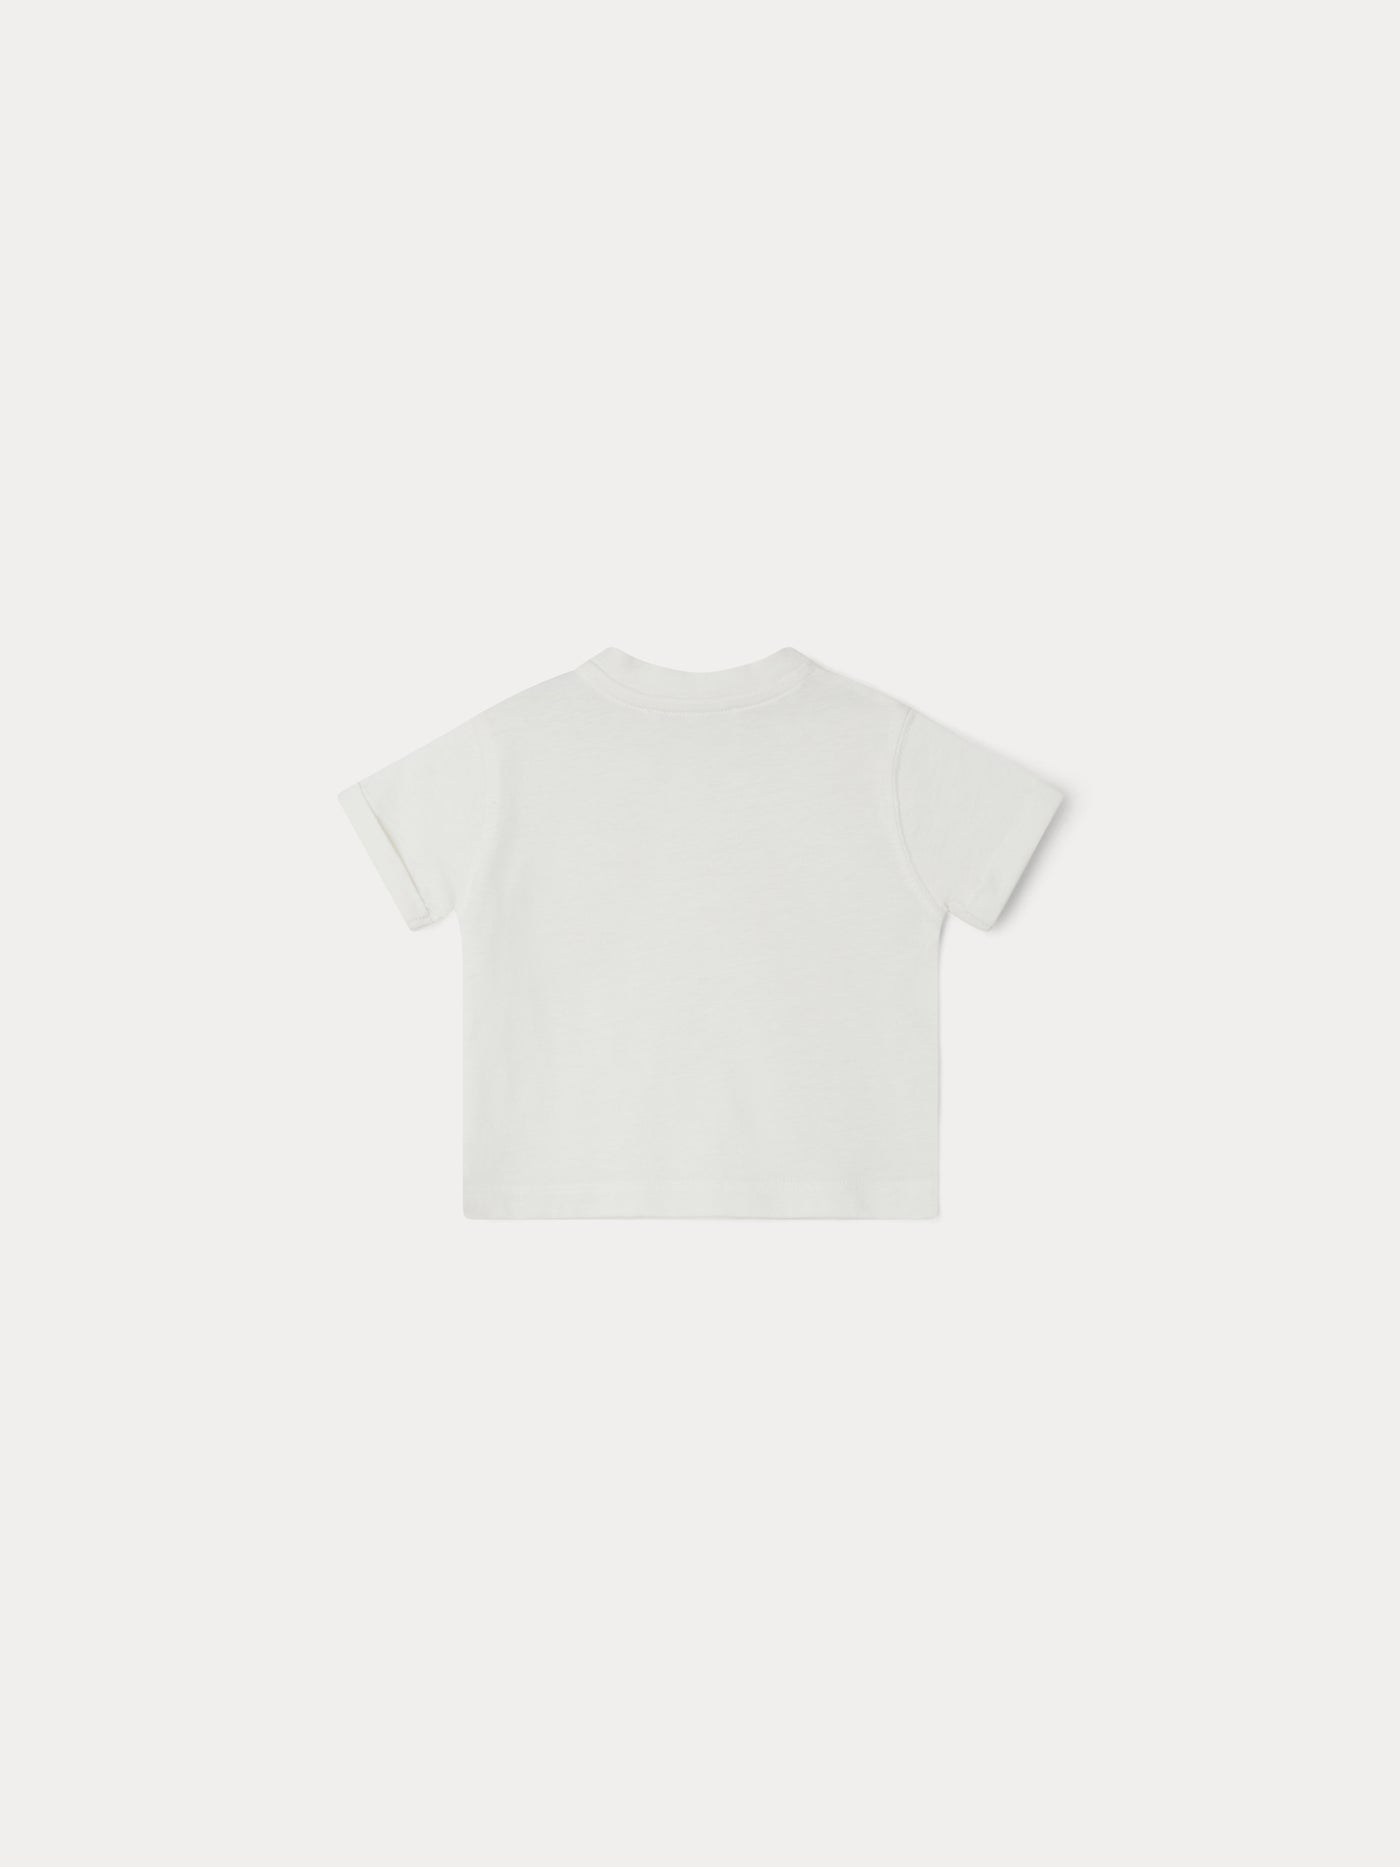 Aiman T-shirt milk white